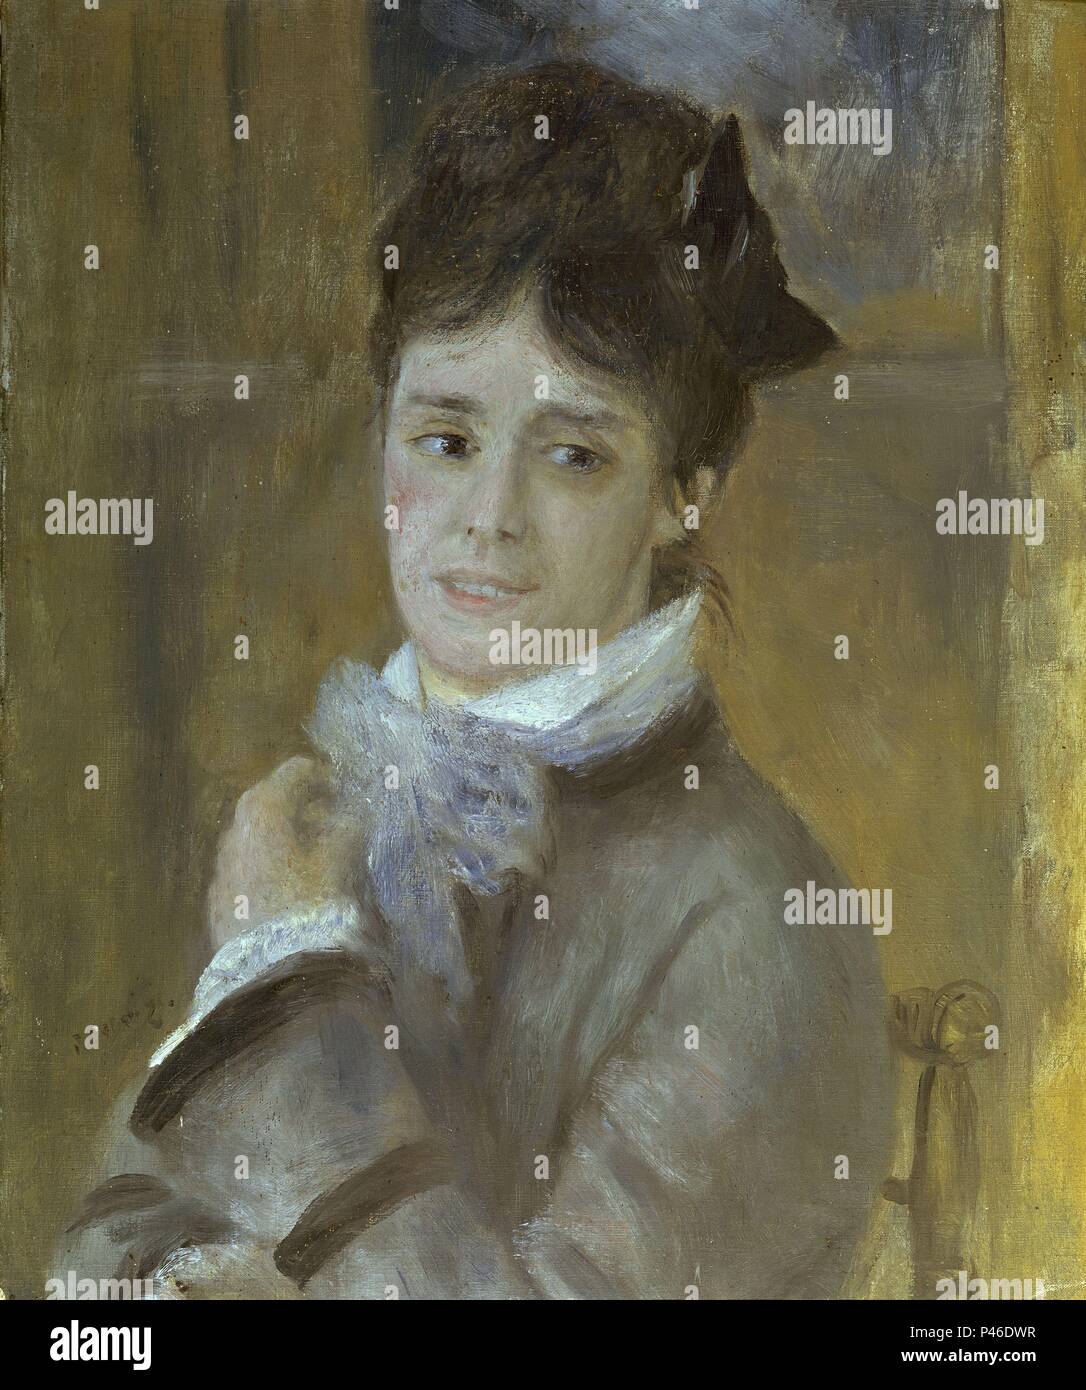 Porträt der Madame Claude Monet - 1872 - 61 x 50 cm - Öl auf Leinwand. Autor: Pierre Auguste Renoir (1841-1919). Ort: Museum Marmottan, Frankreich. Auch als: RETRATO DE CAMILLE MONET bekannt. Stockfoto